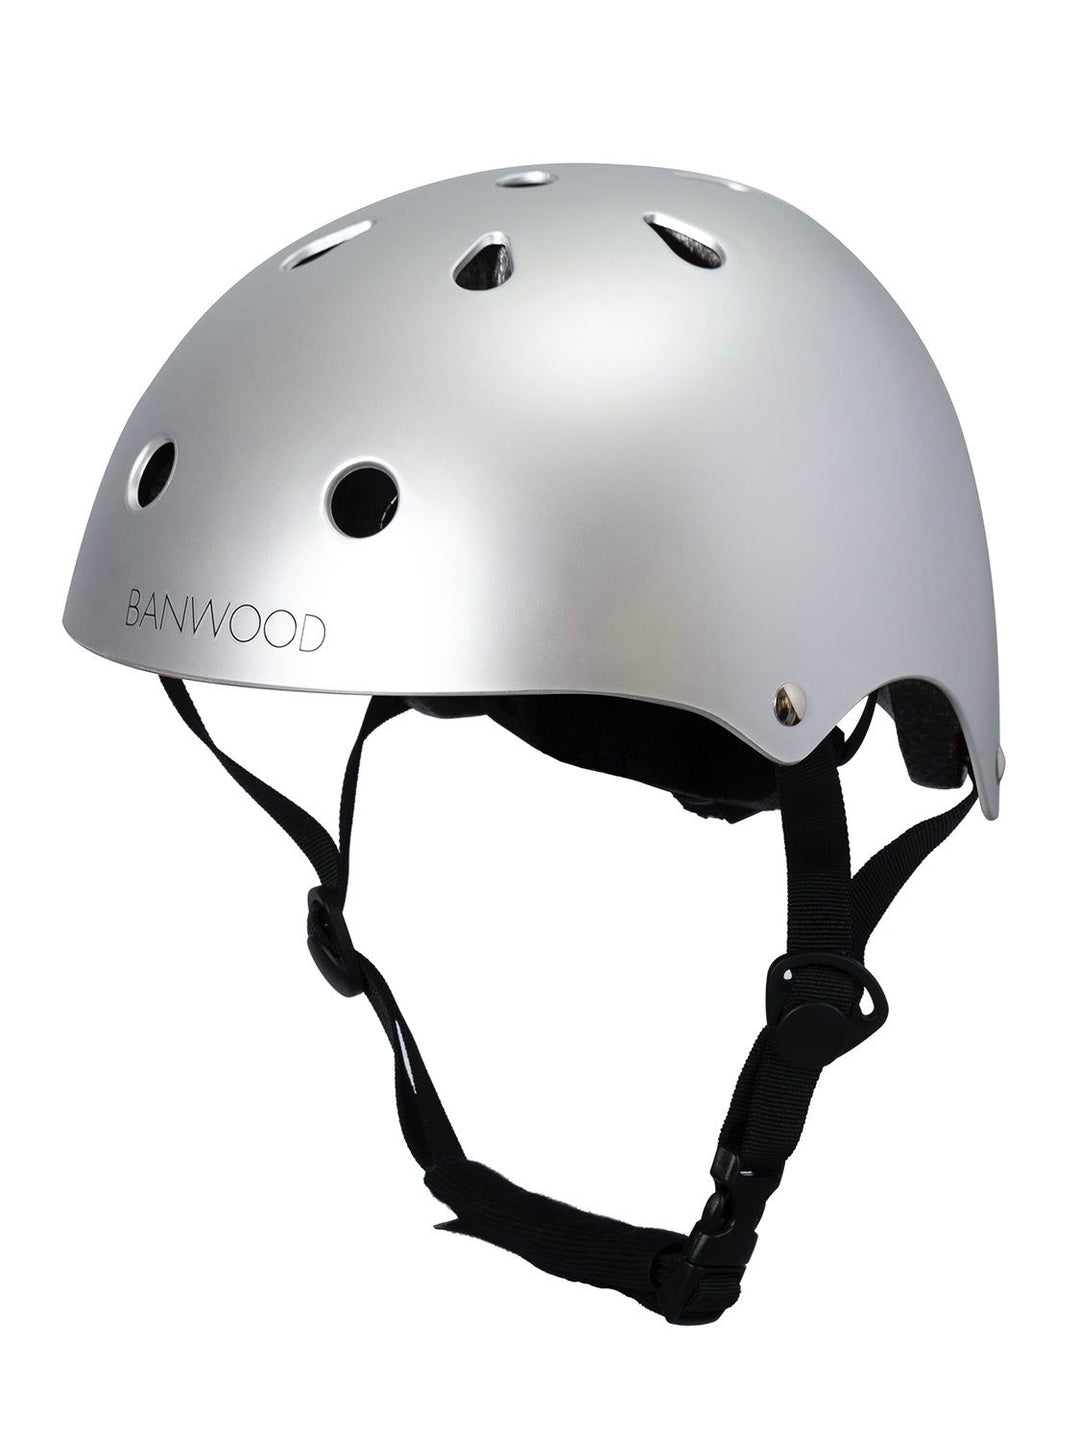 Banwood Classic Helmet in Chrome